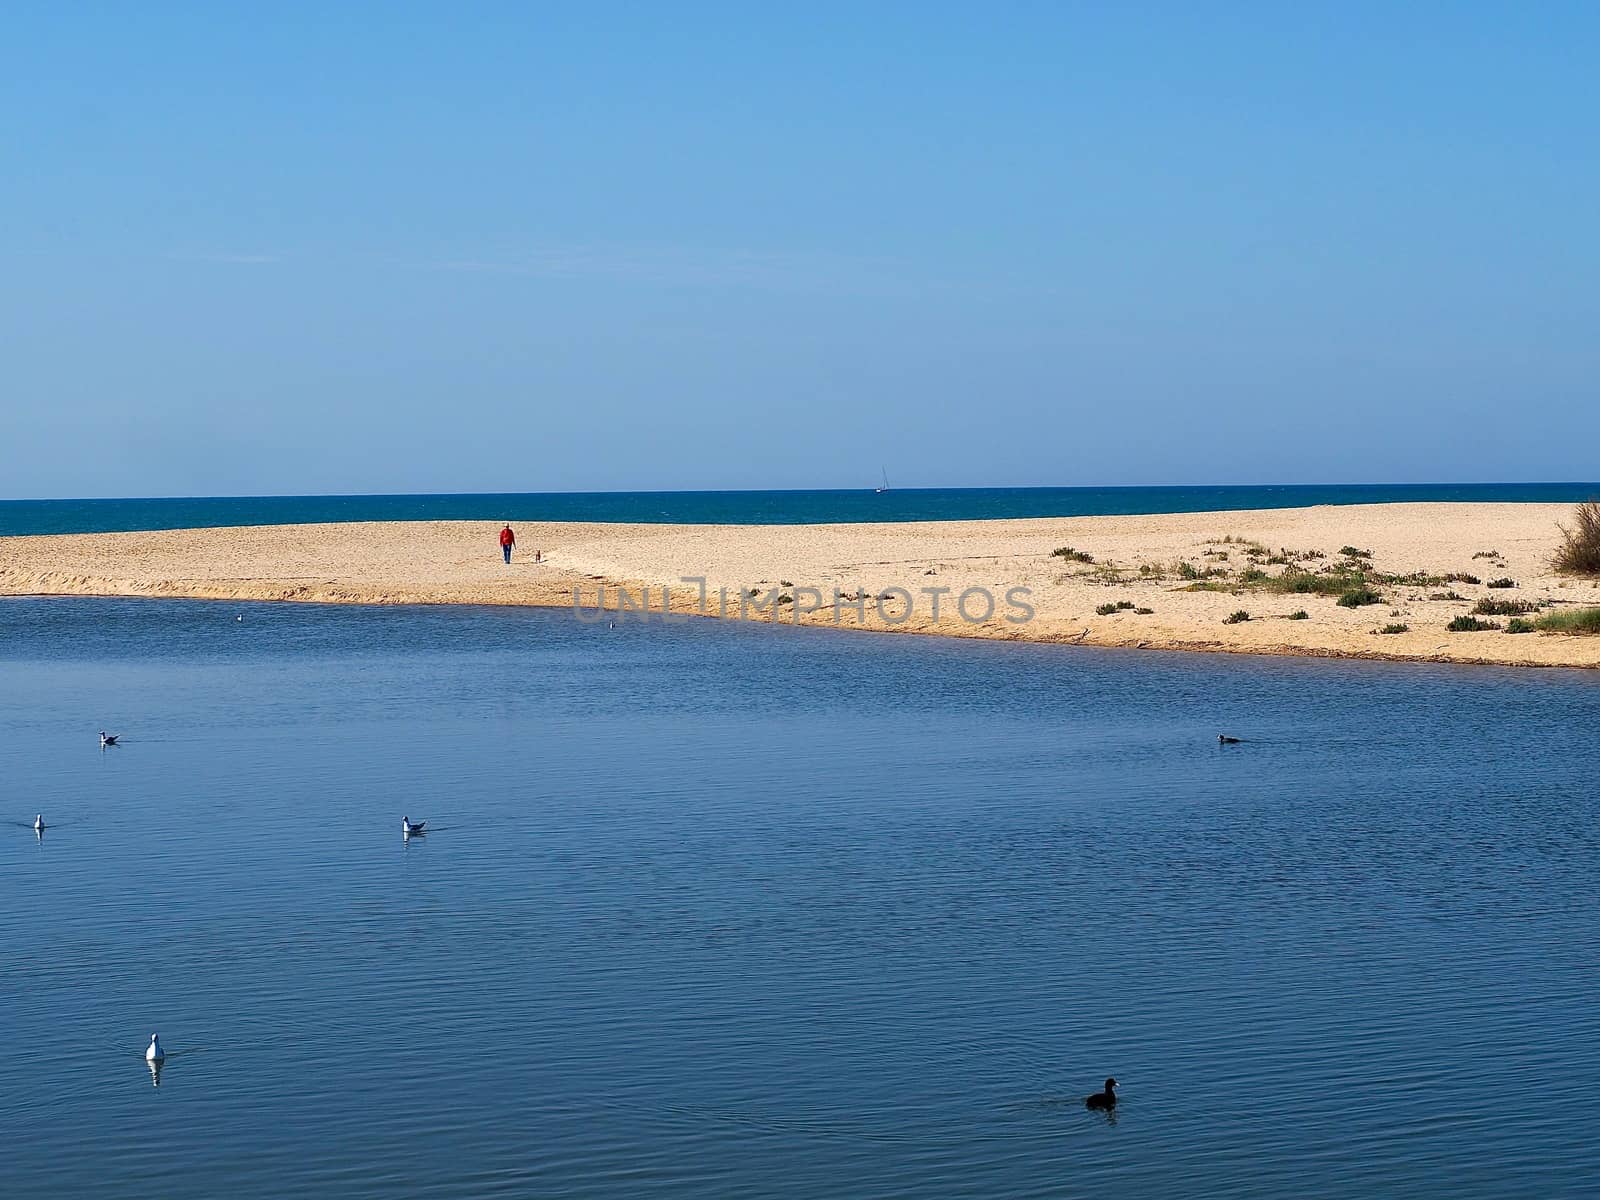 Beautiful lagoon Lagoa dos Salgados near Albufeira in Portugal by Stimmungsbilder